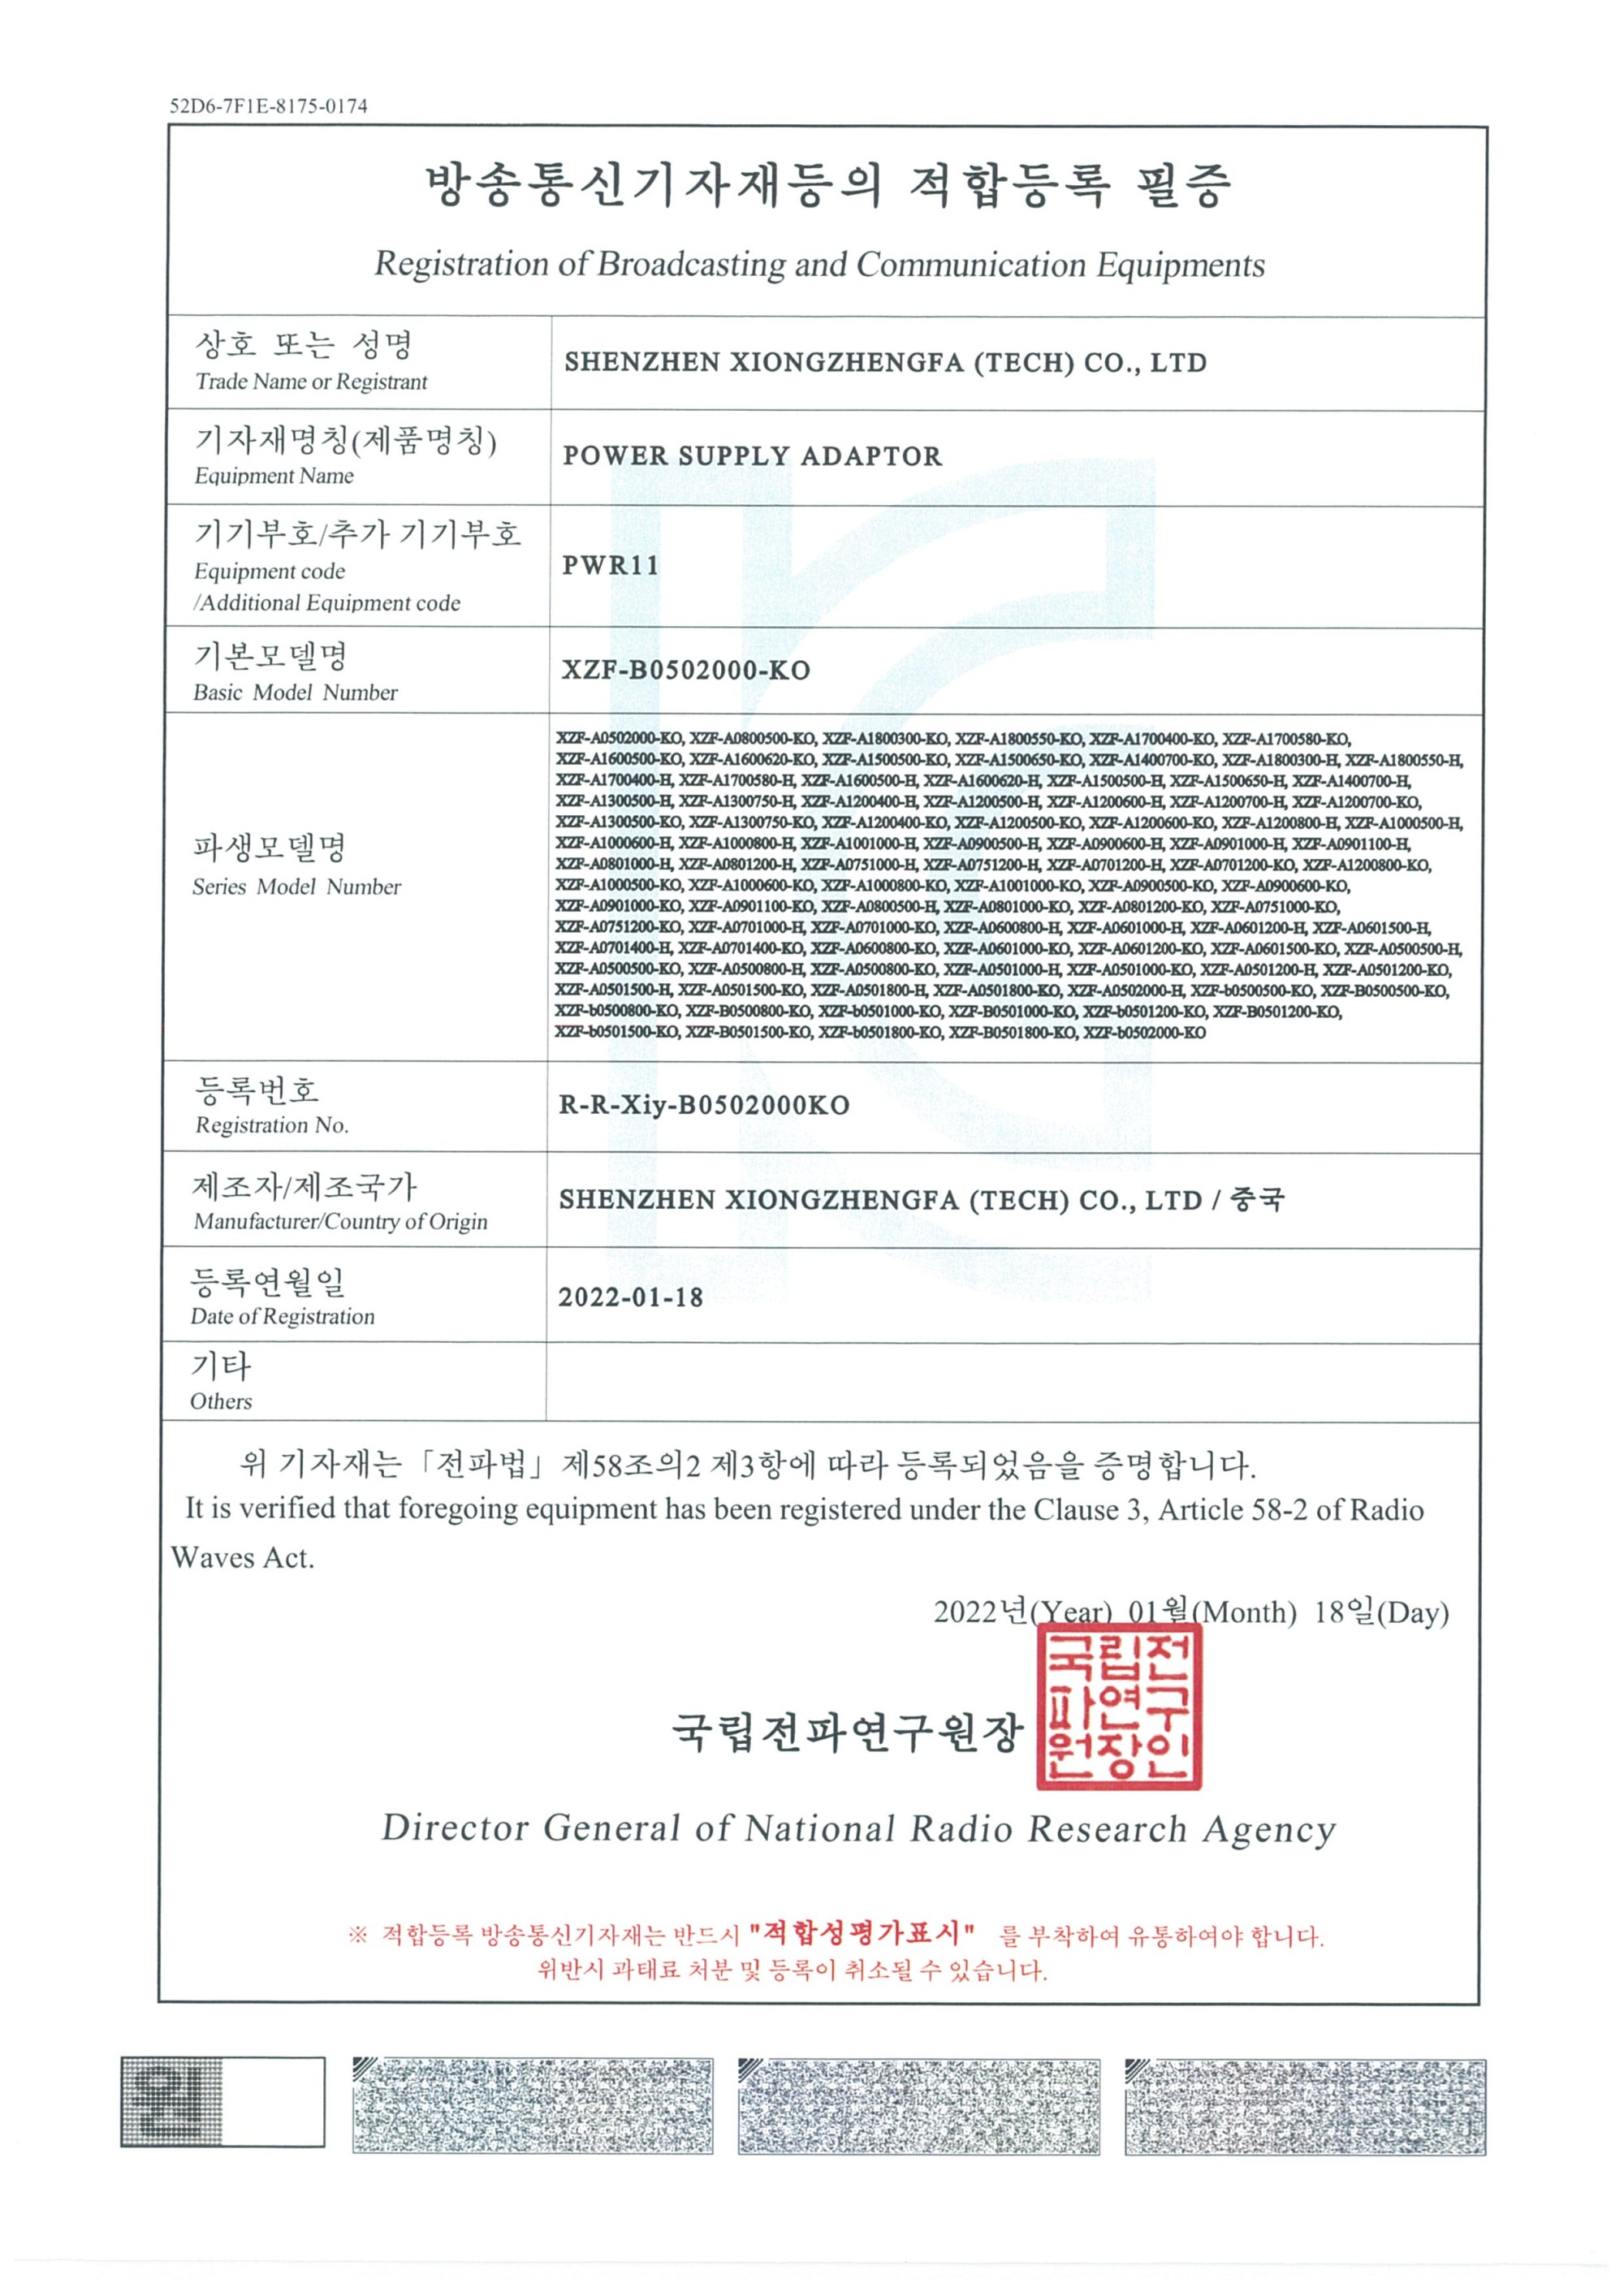 KO Korean certification